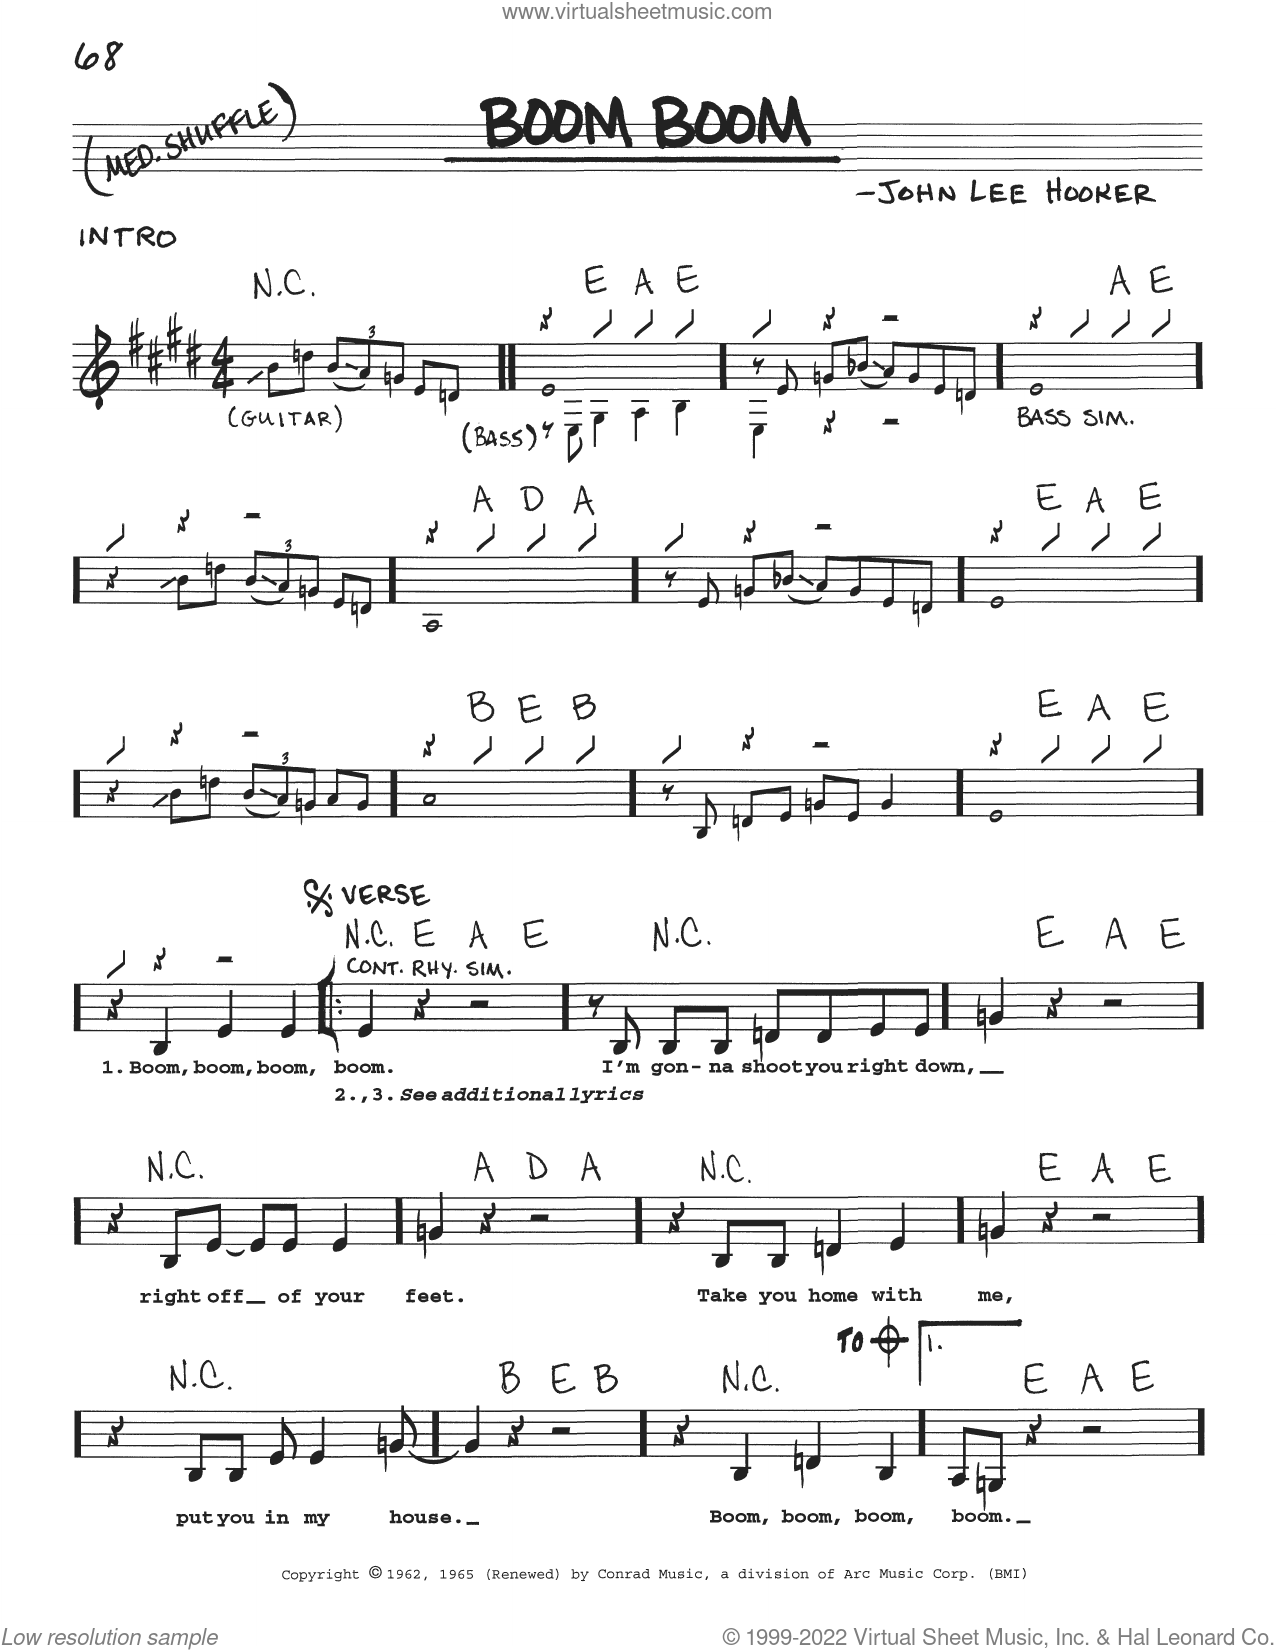 Boom Boom sheet music (real book with lyrics) (PDF)